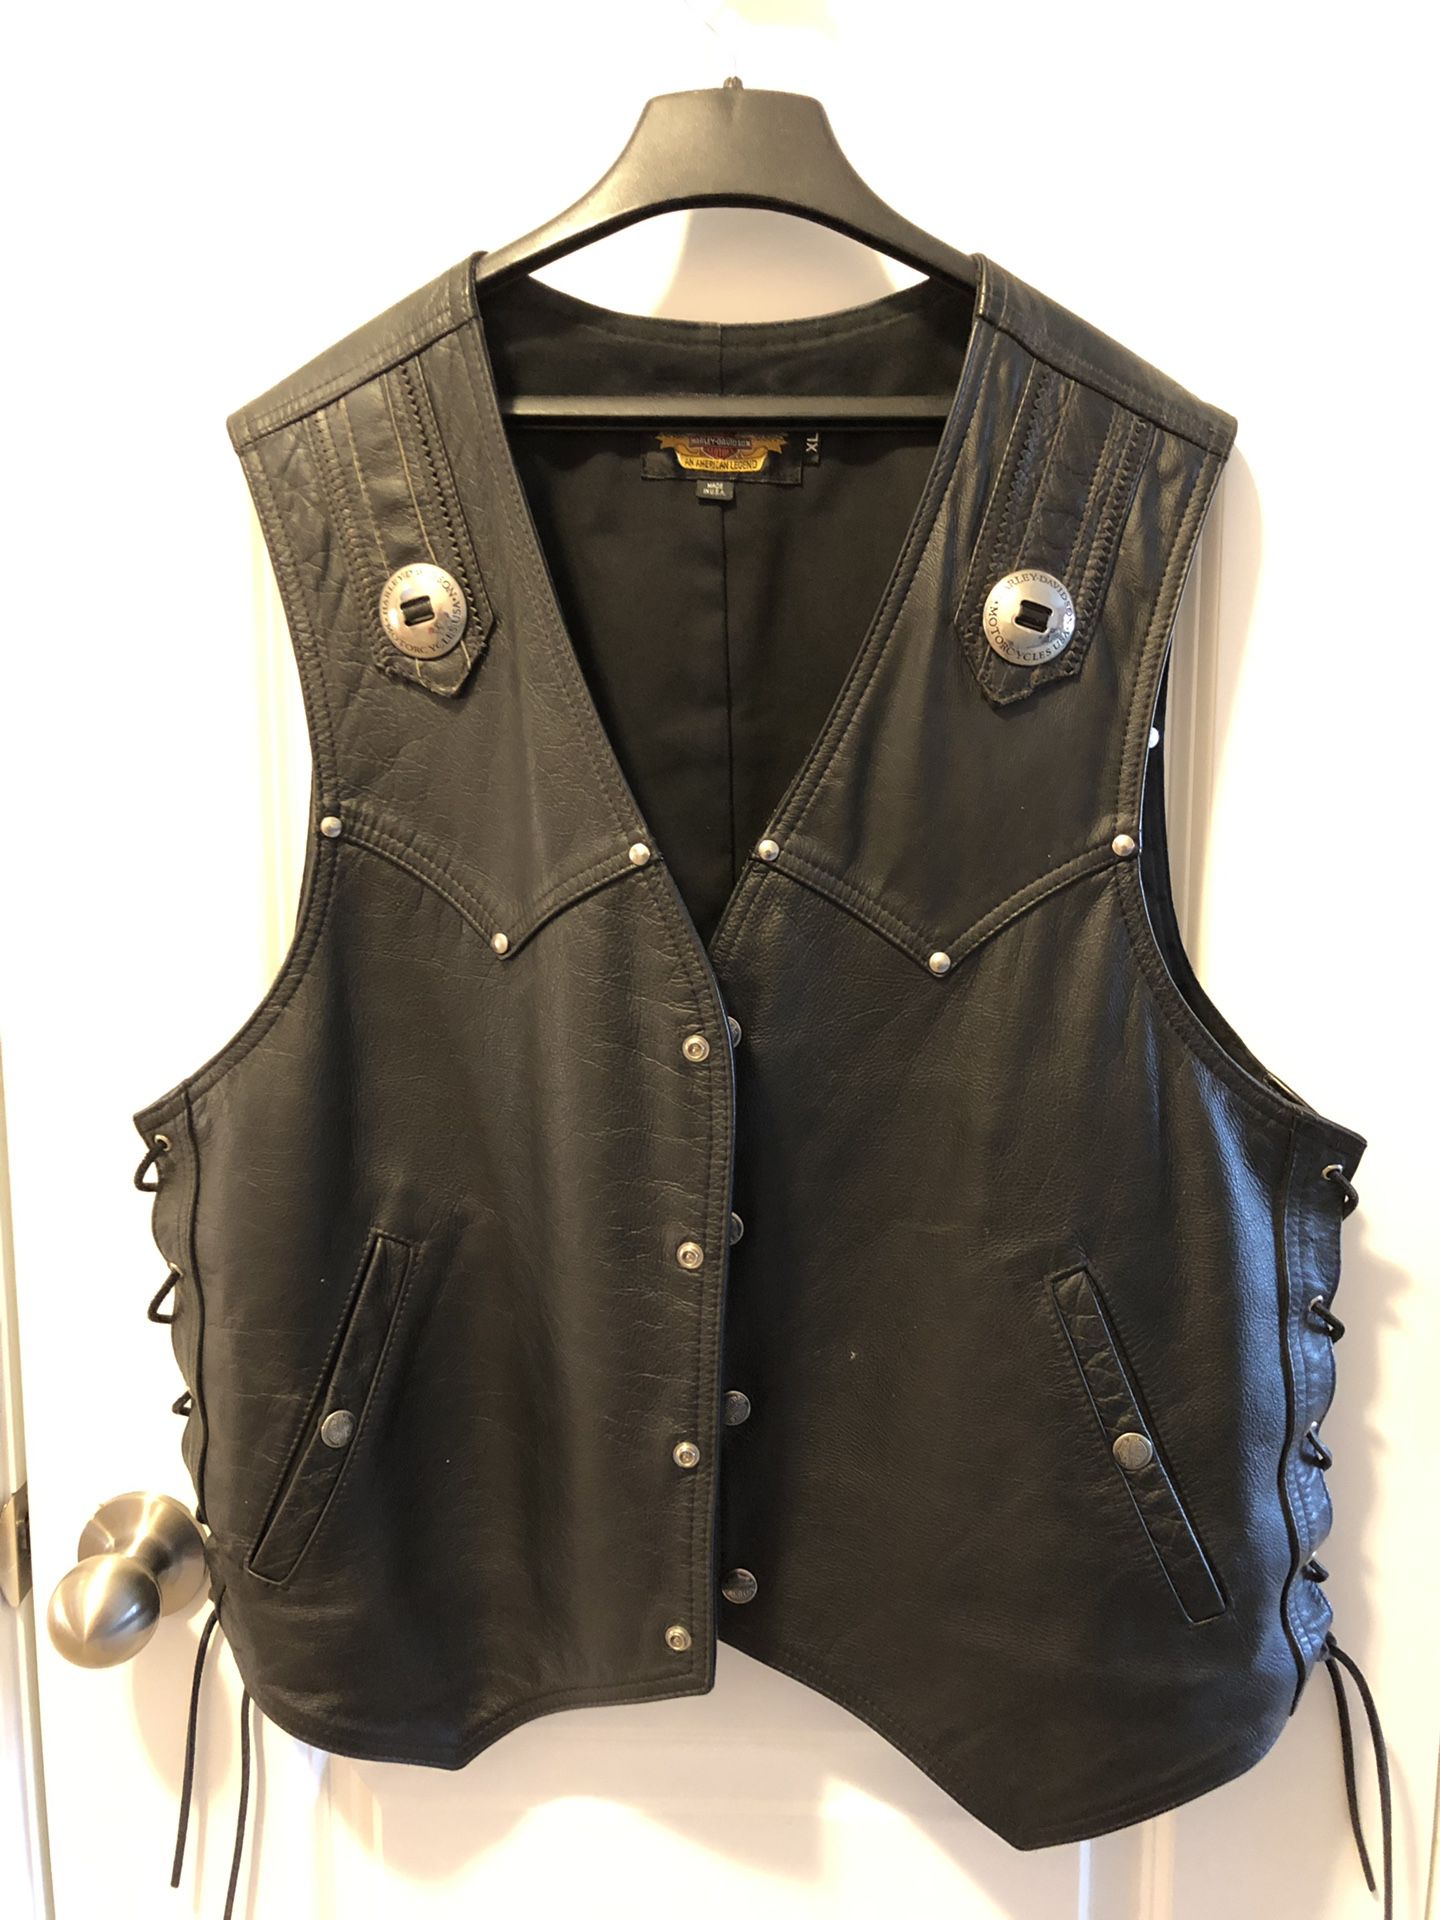 Classic men’s Harley Davidson vest with tassels